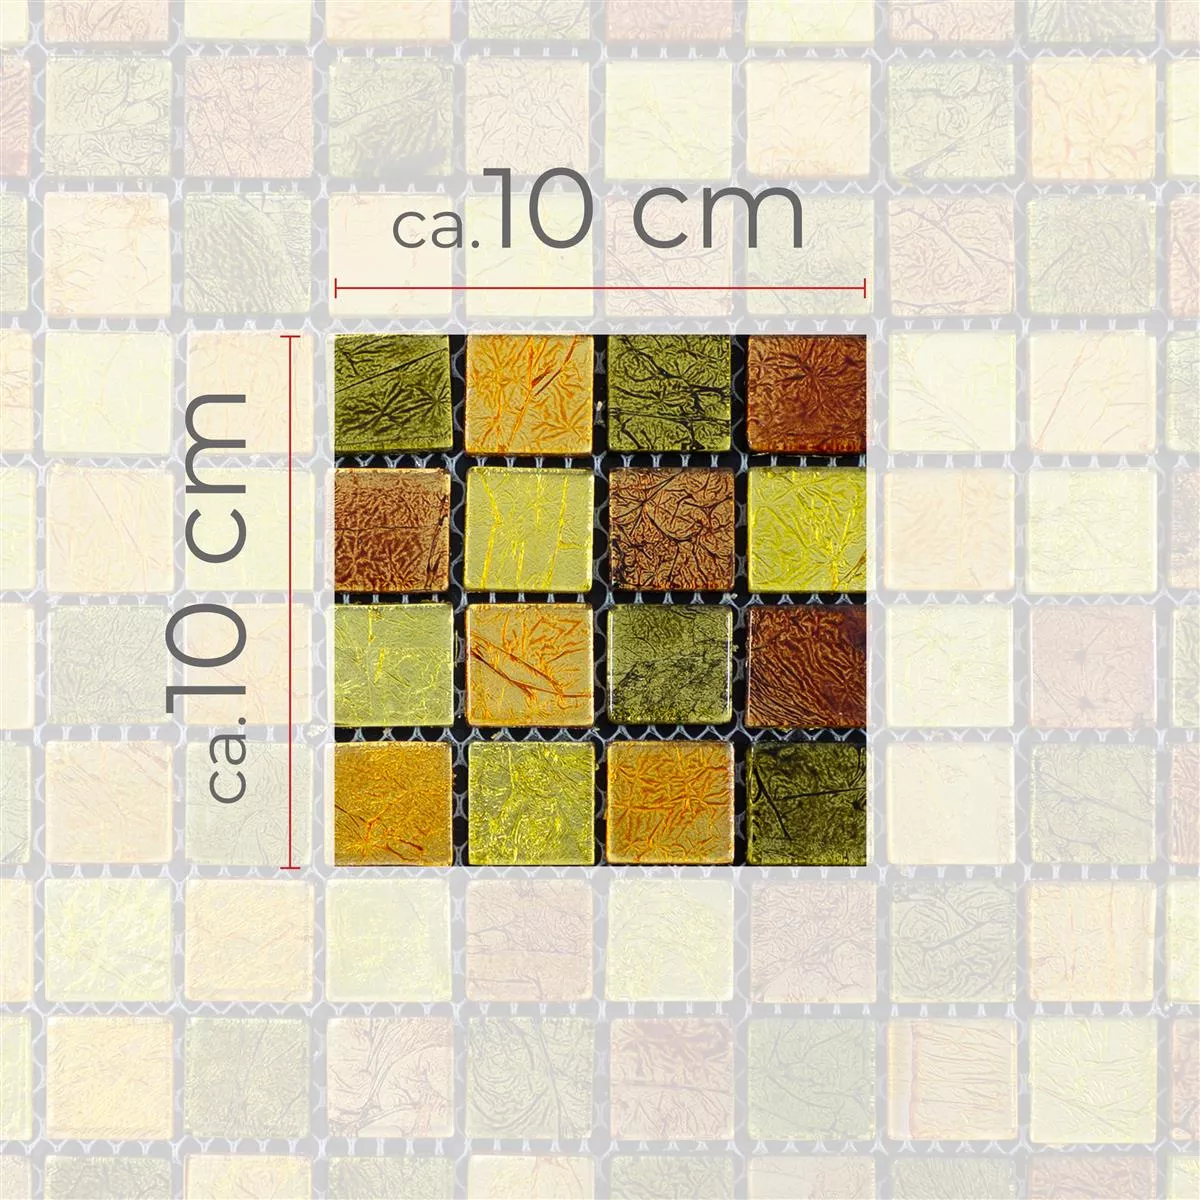 Model Mozaic De Sticlă Gresie Curlew Galben Portocale 23 4mm